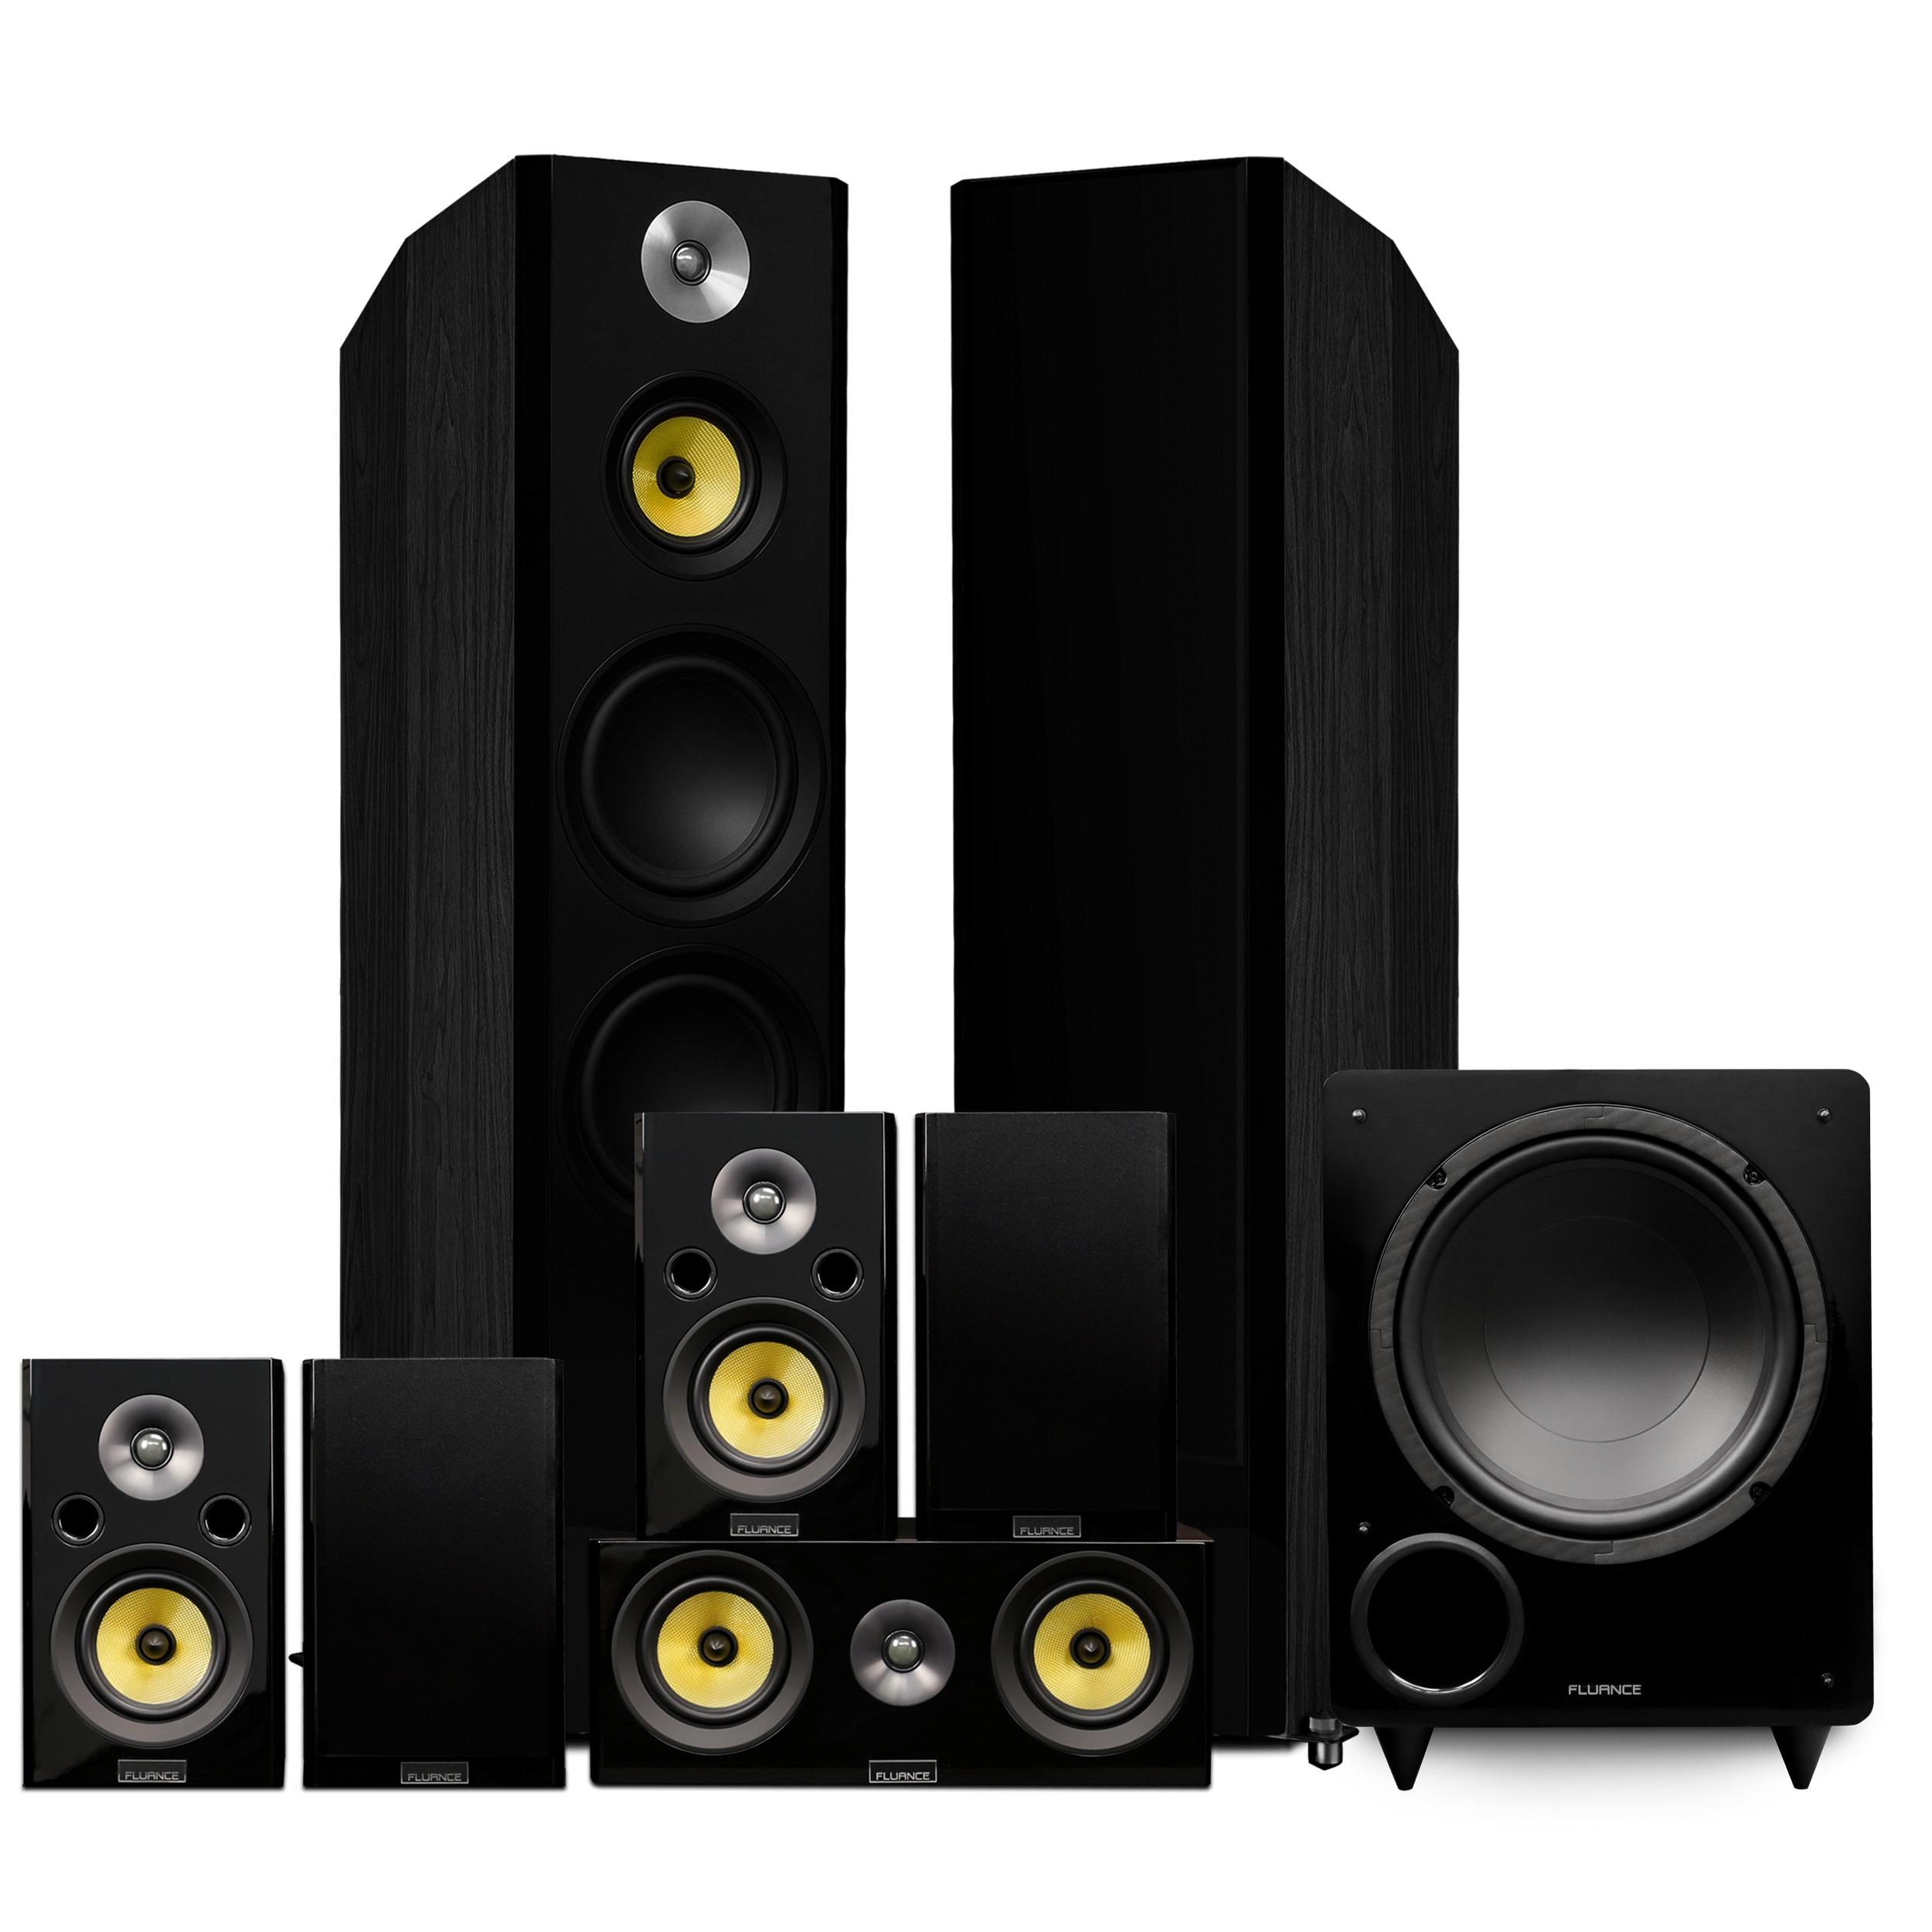 Fluance Signature Surround Sound Home Theater 7.1 Speaker System - Black - image 1 of 9